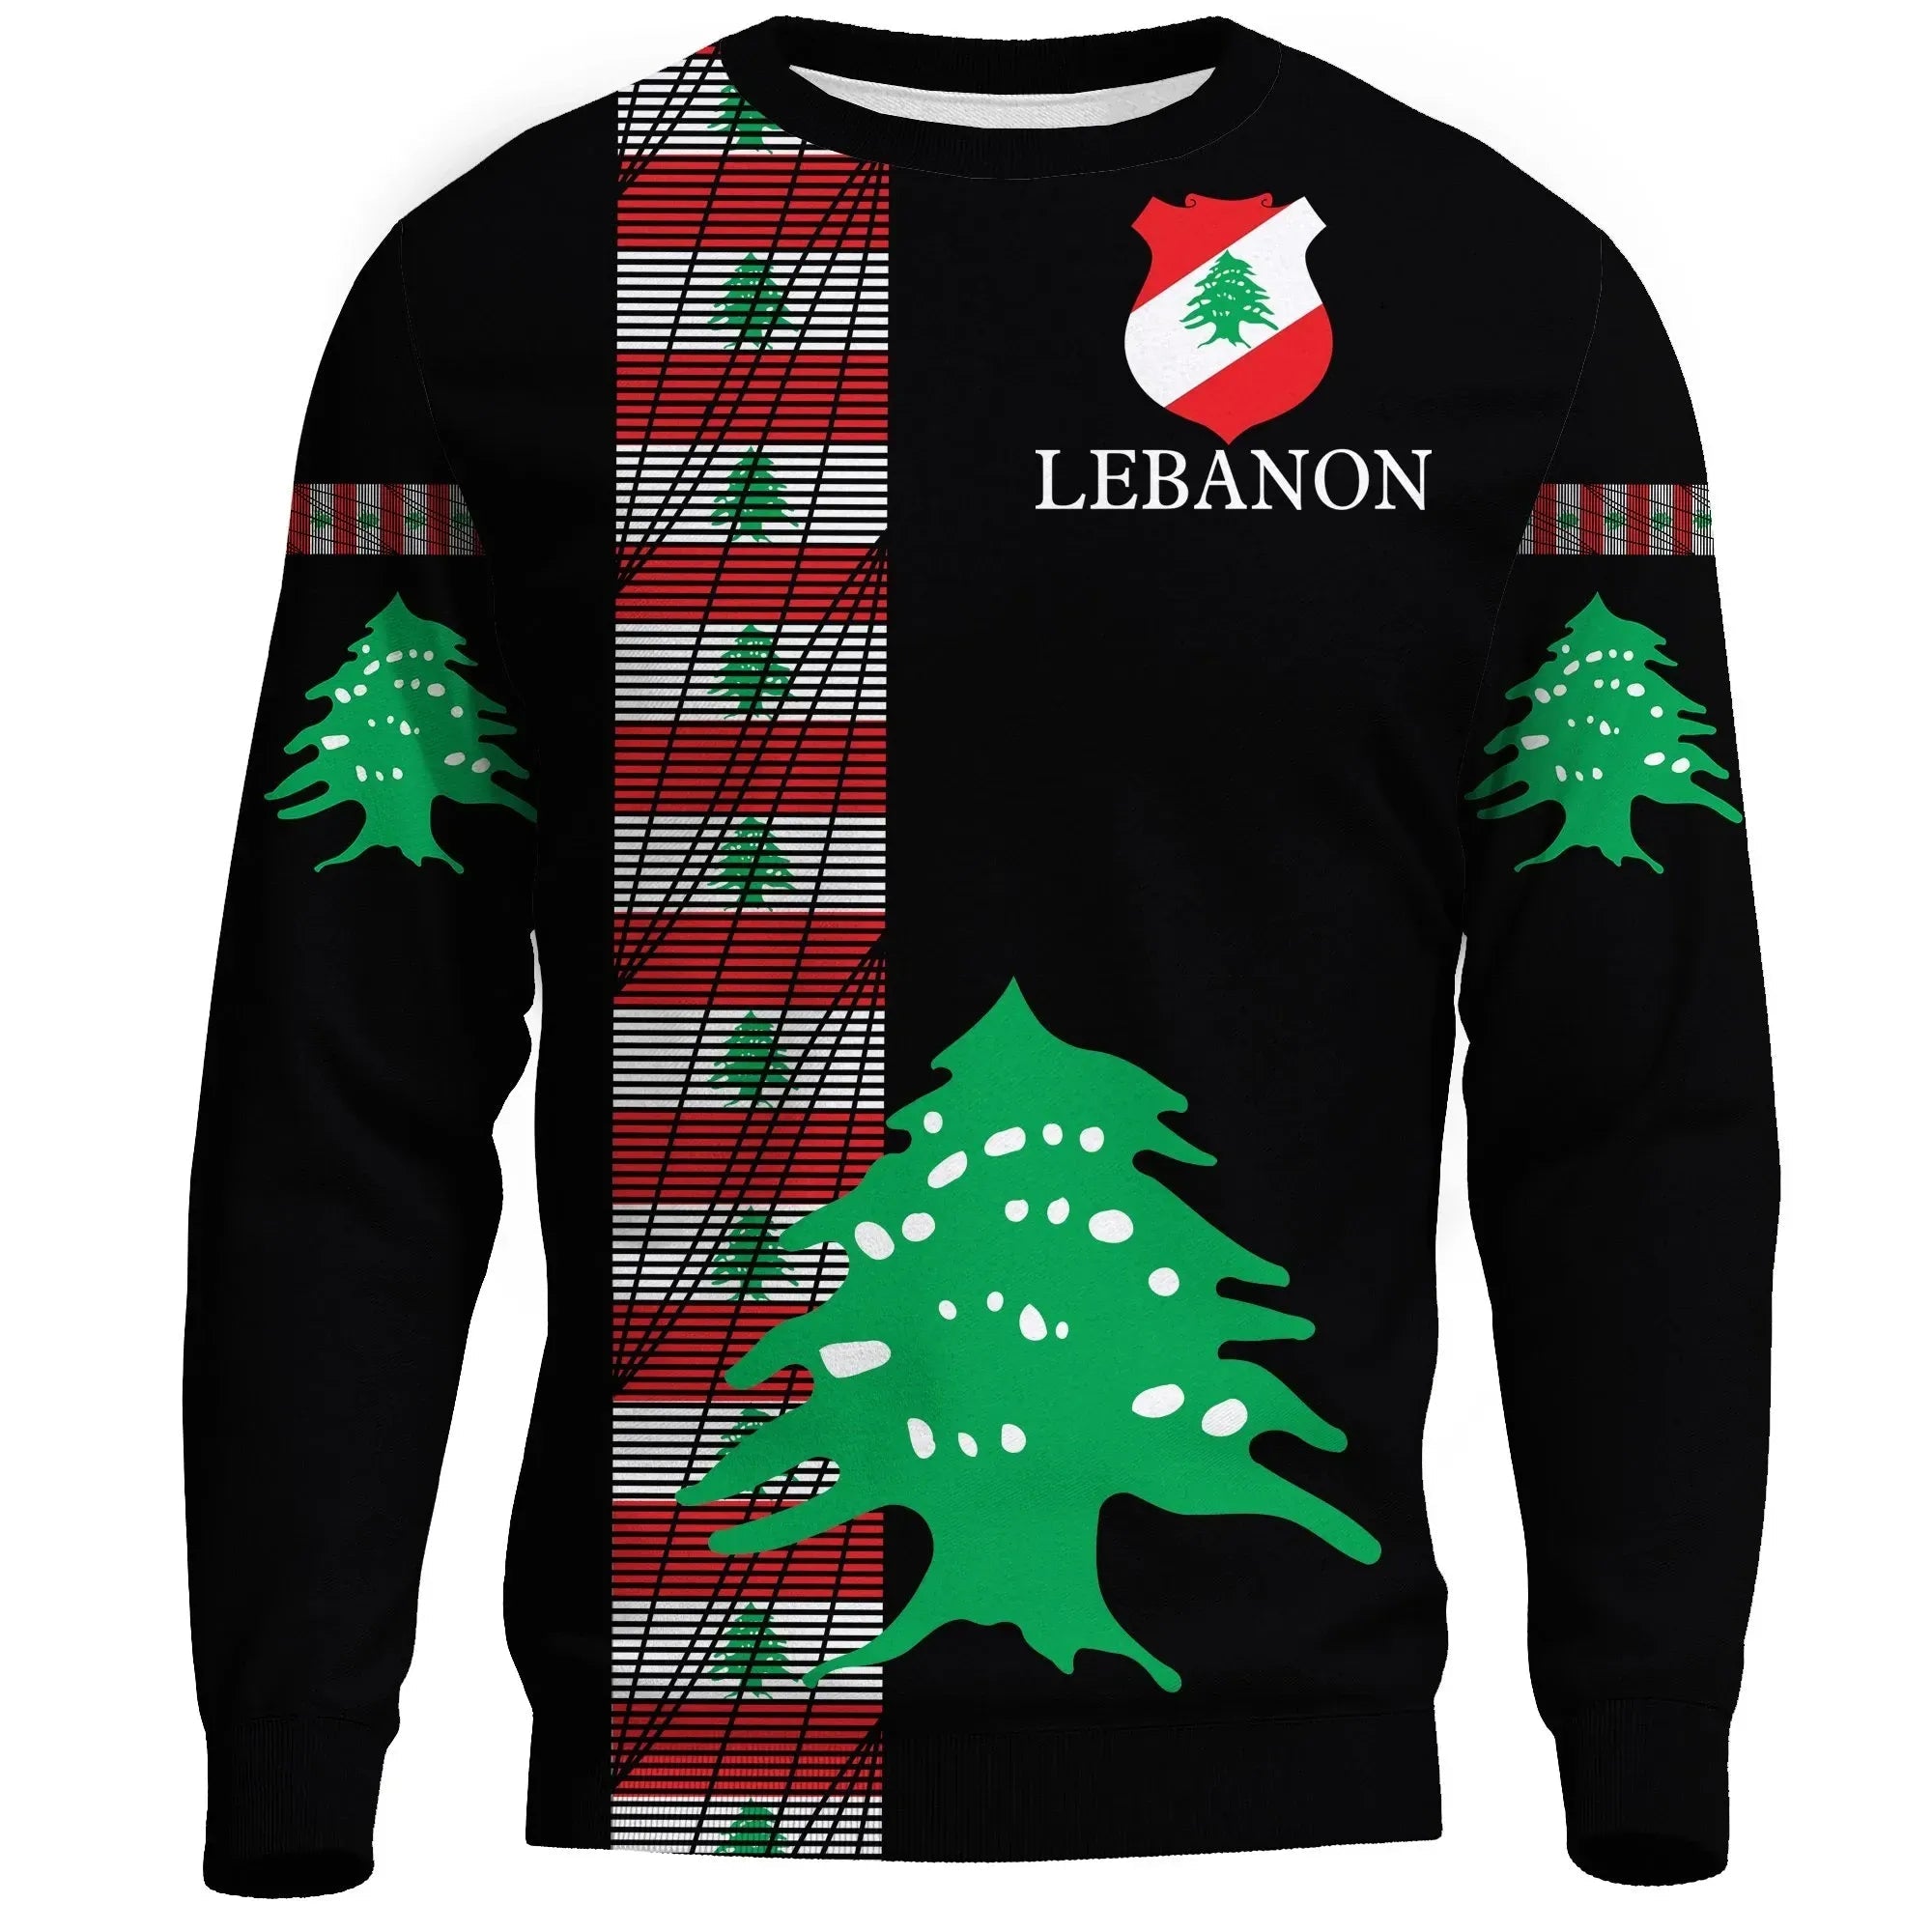 lebanon-united-sweatshirt-knitted-long-sleeved-sweater